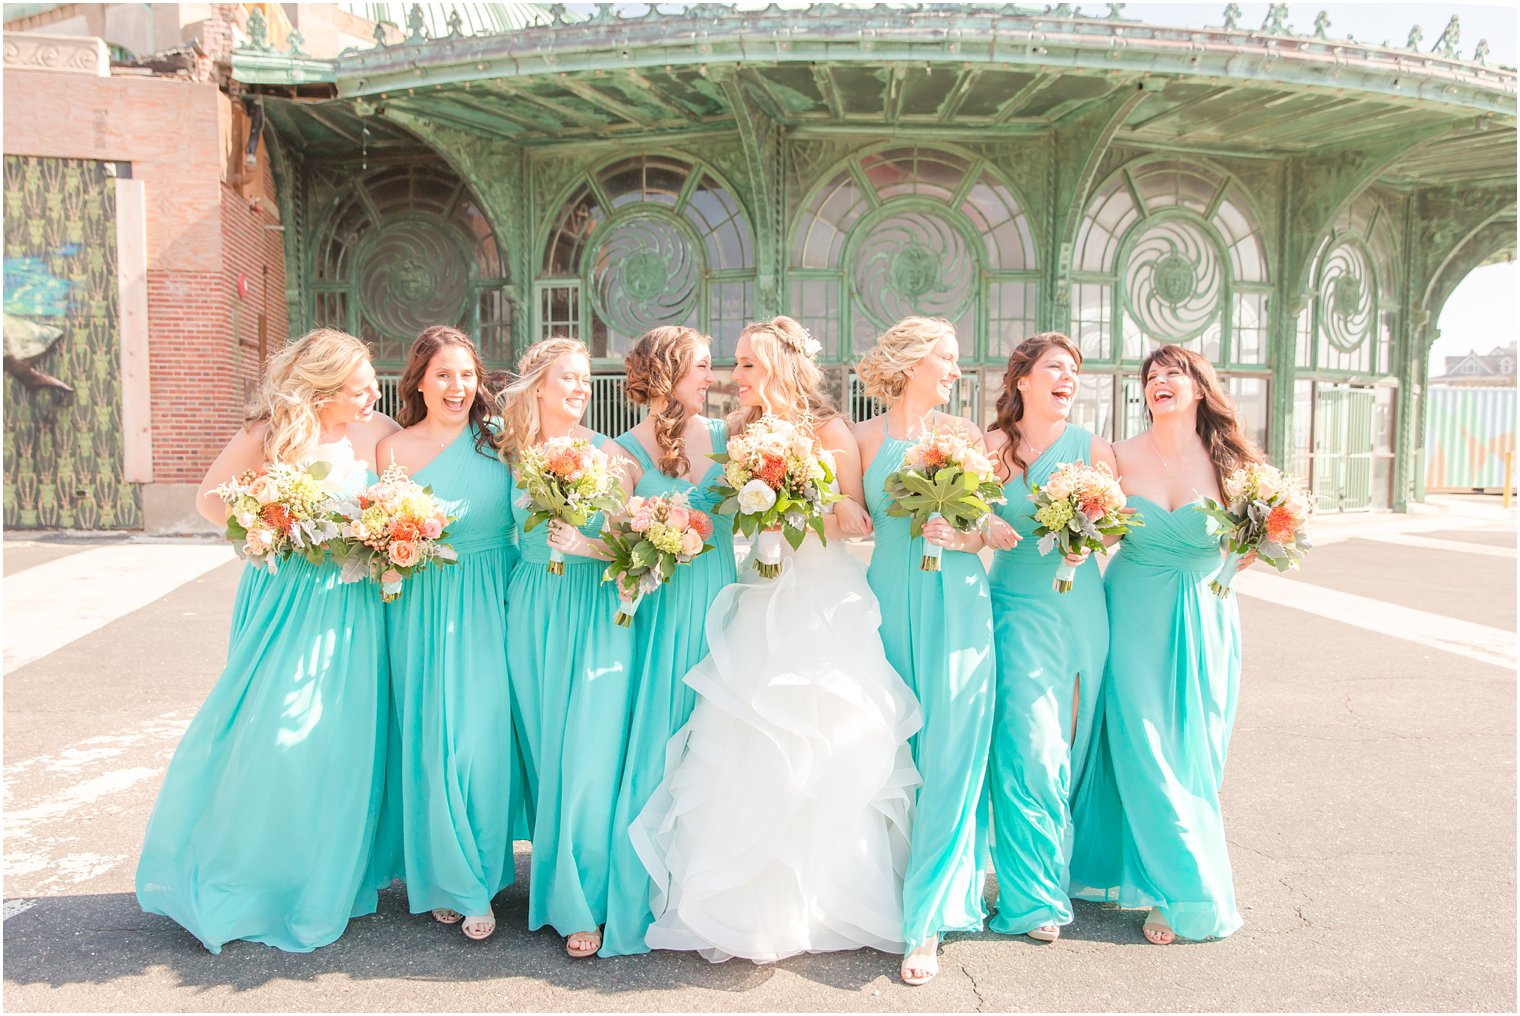 Bridesmaids wearing turquoise dresses